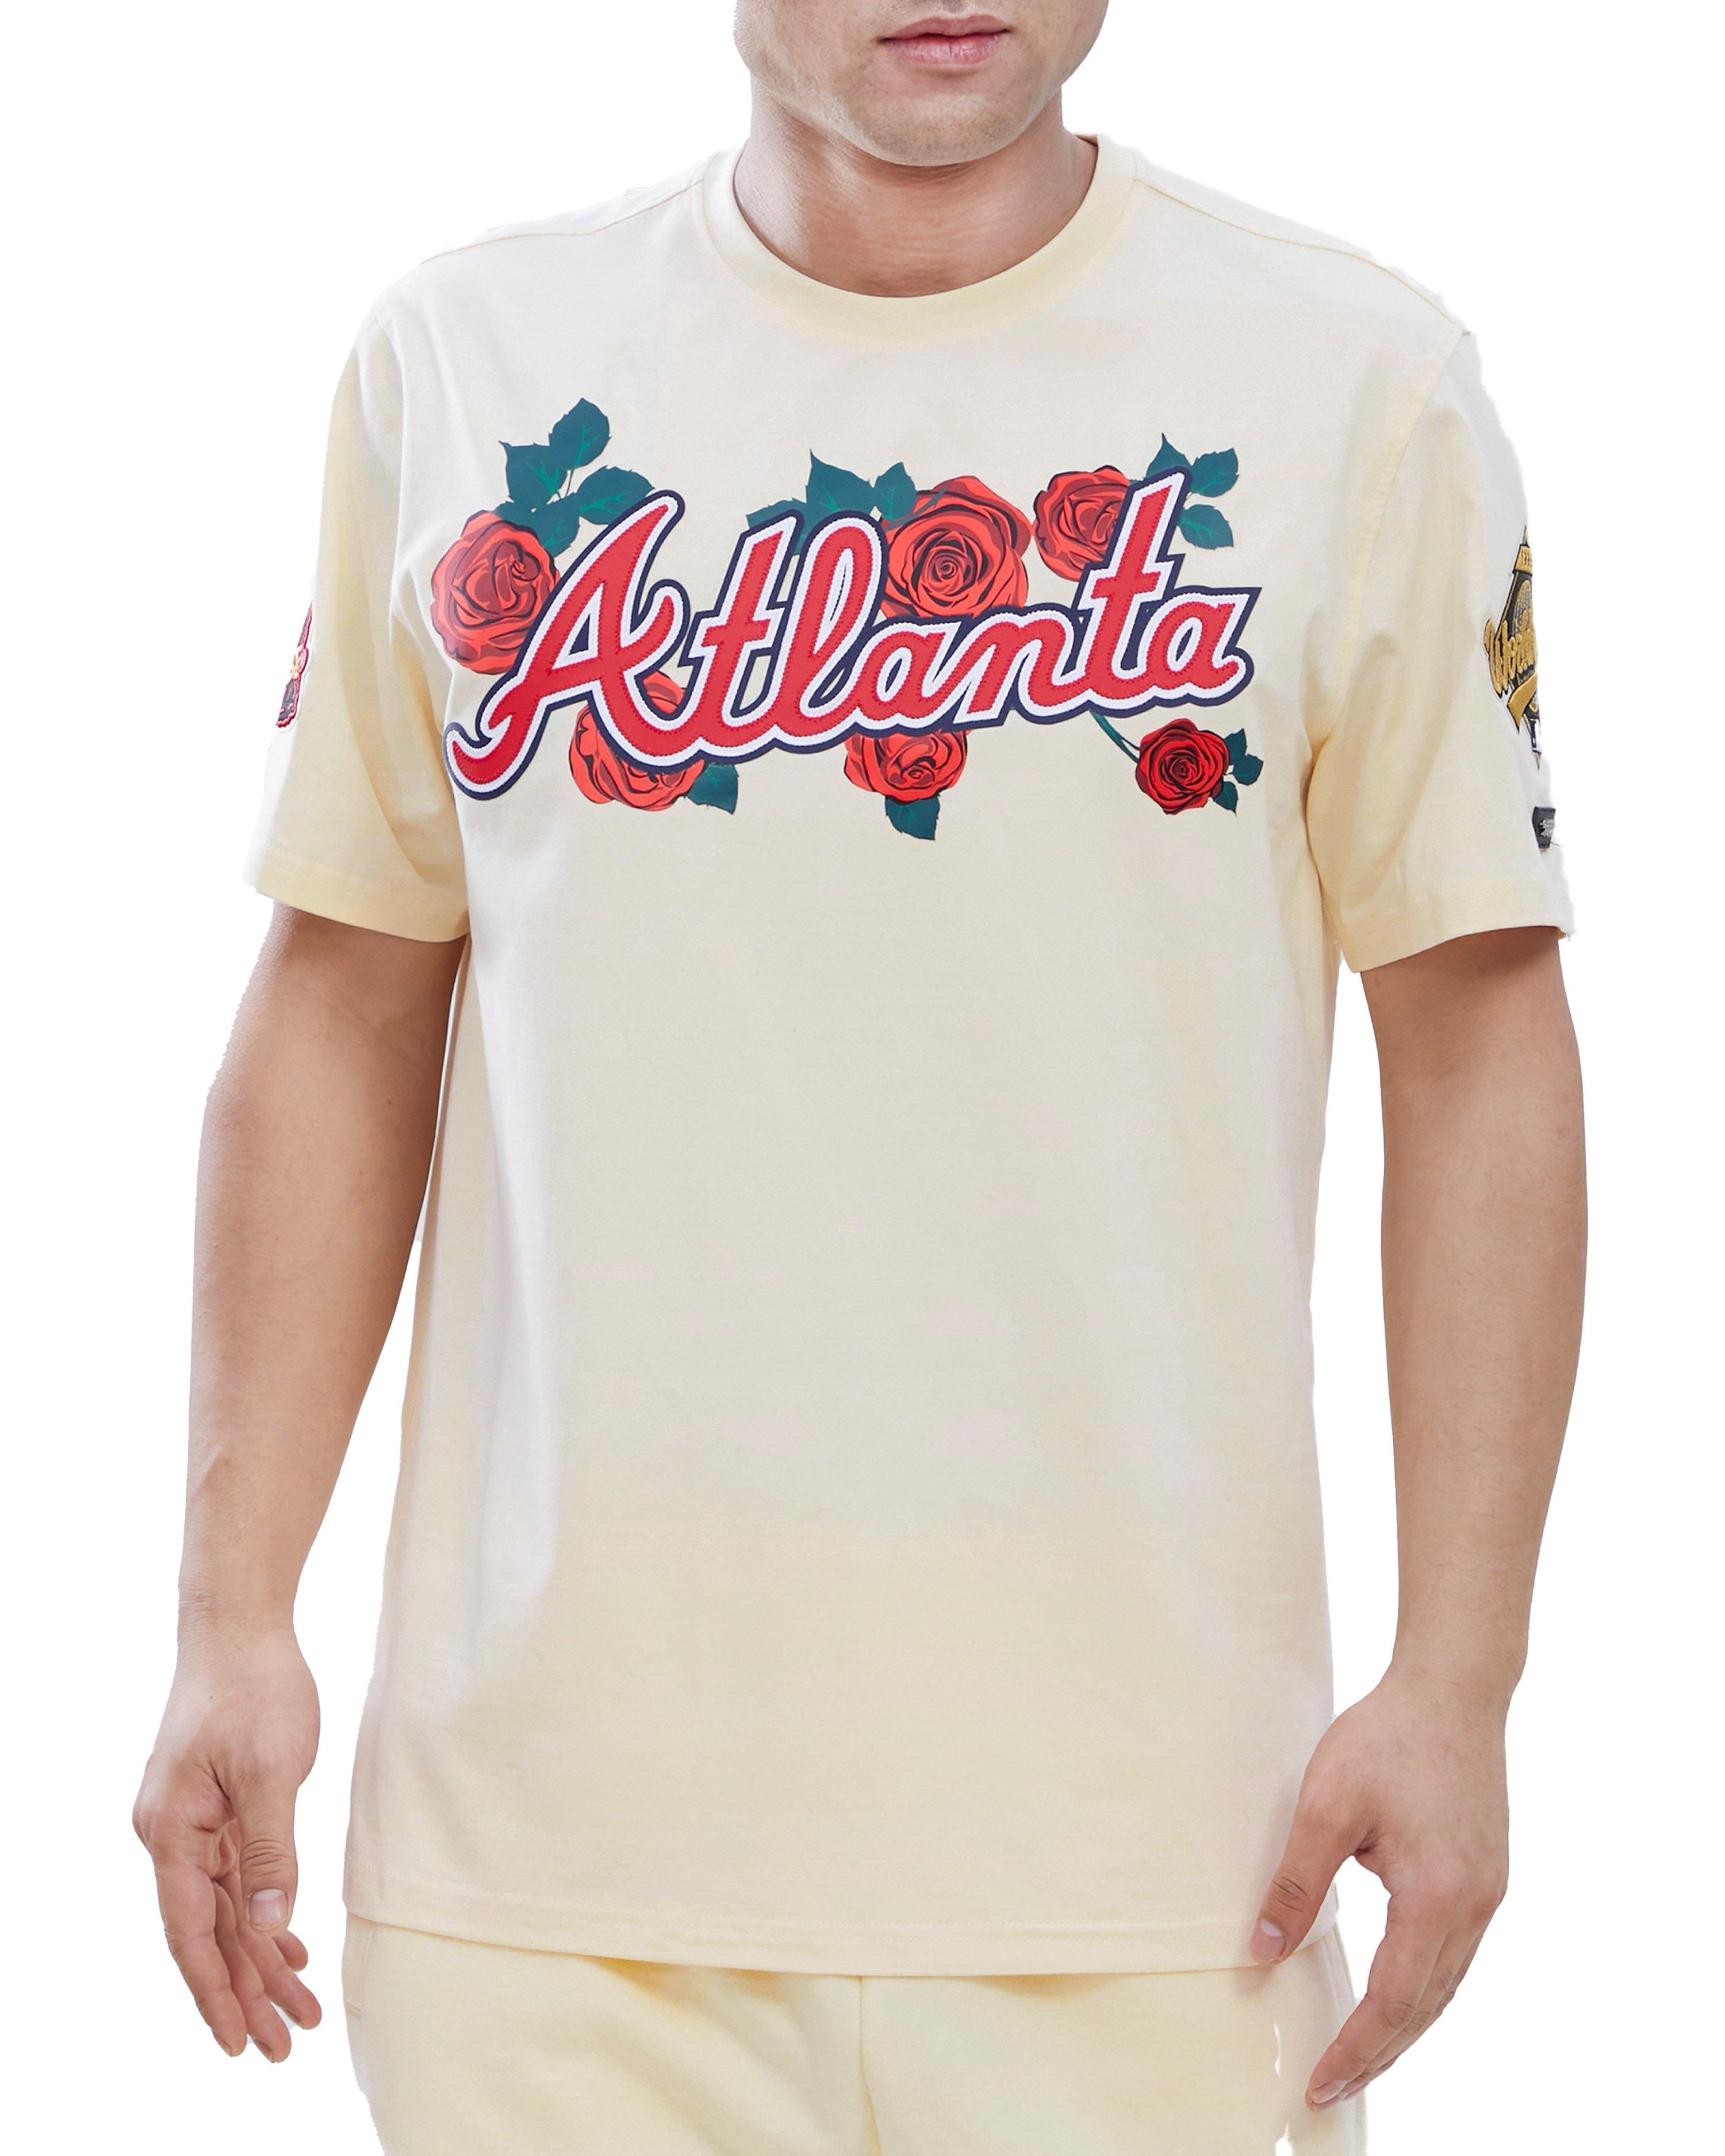 Shop Now - Hersmiles  Braves shirts, Atlanta braves shirt